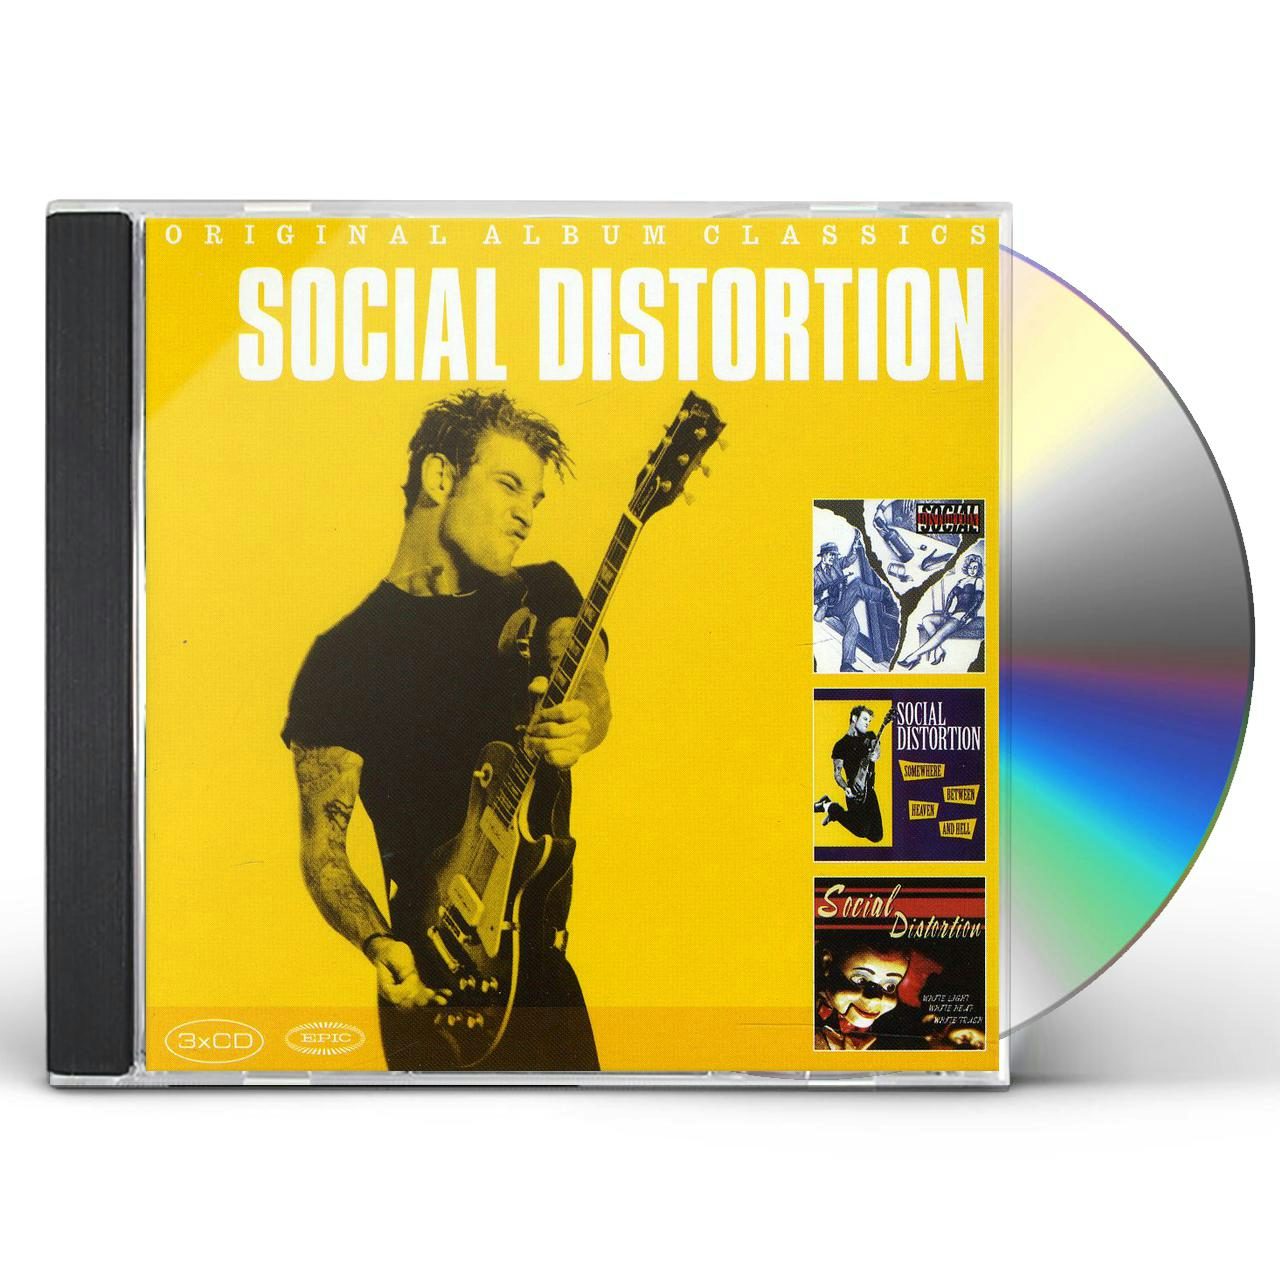 social distortion album 1990 4shared rar